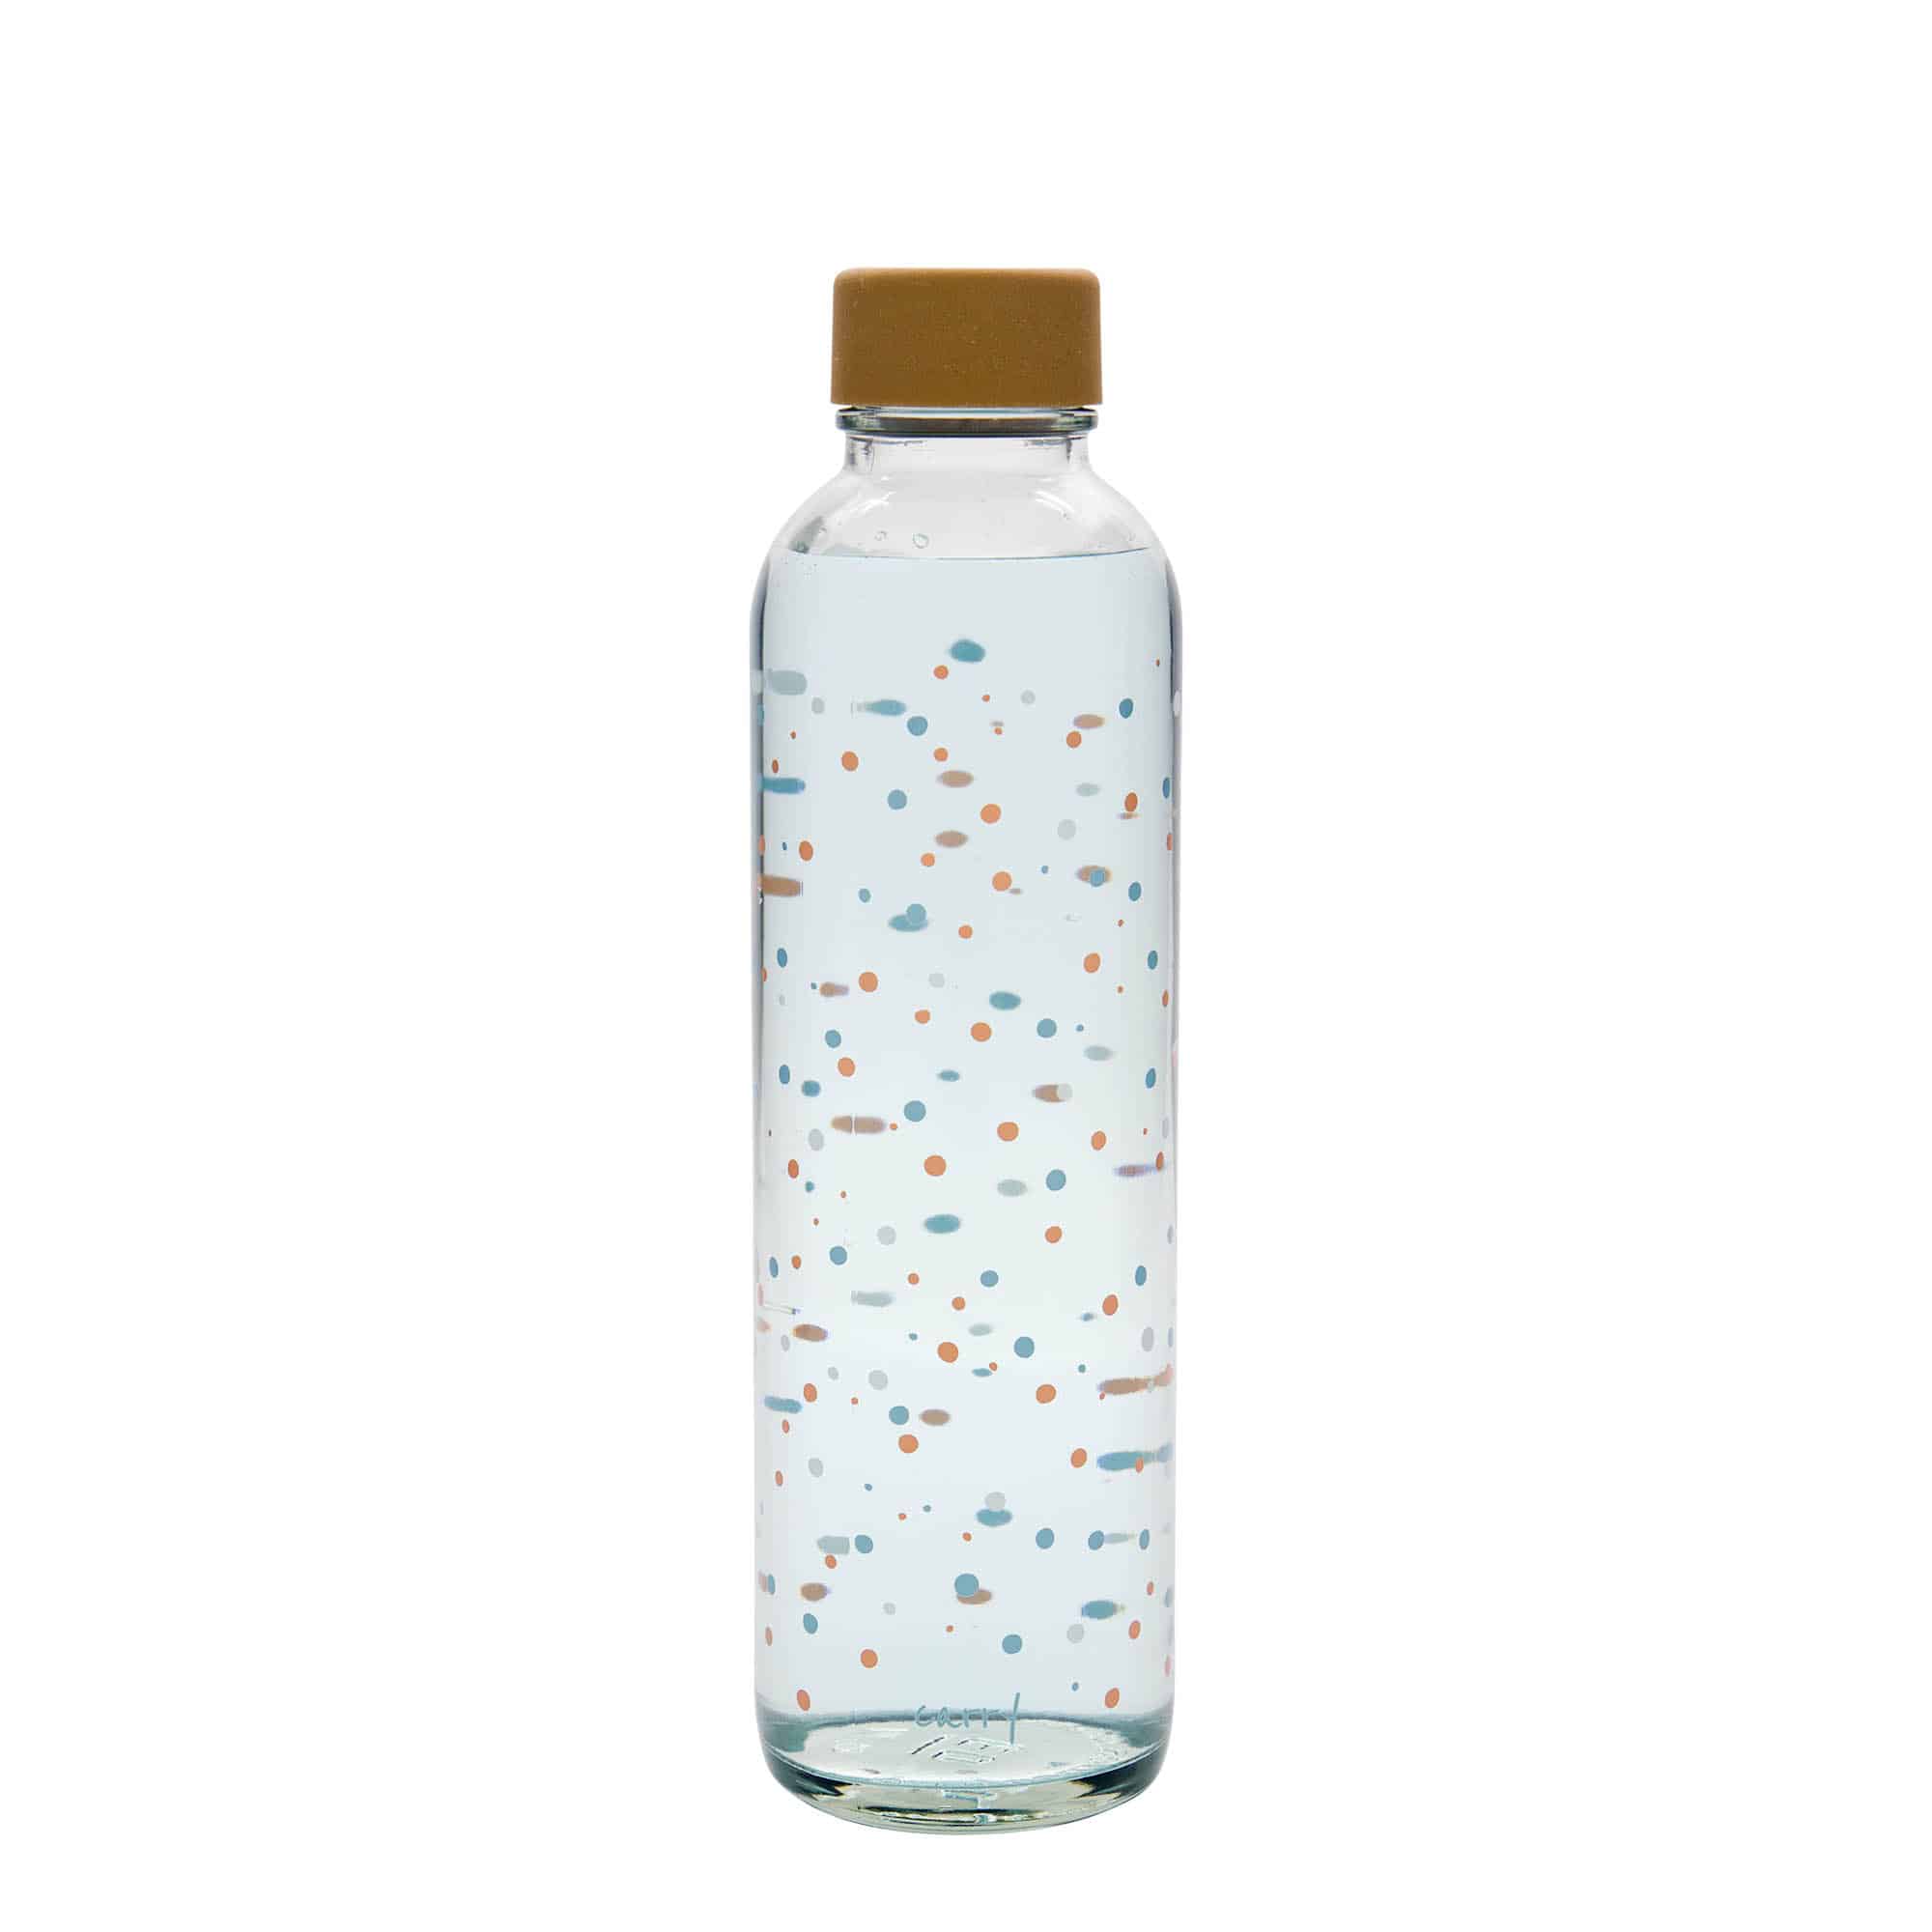 700 ml water bottle ‘CARRY Bottle’, print: Flying Circles, closure: screw cap